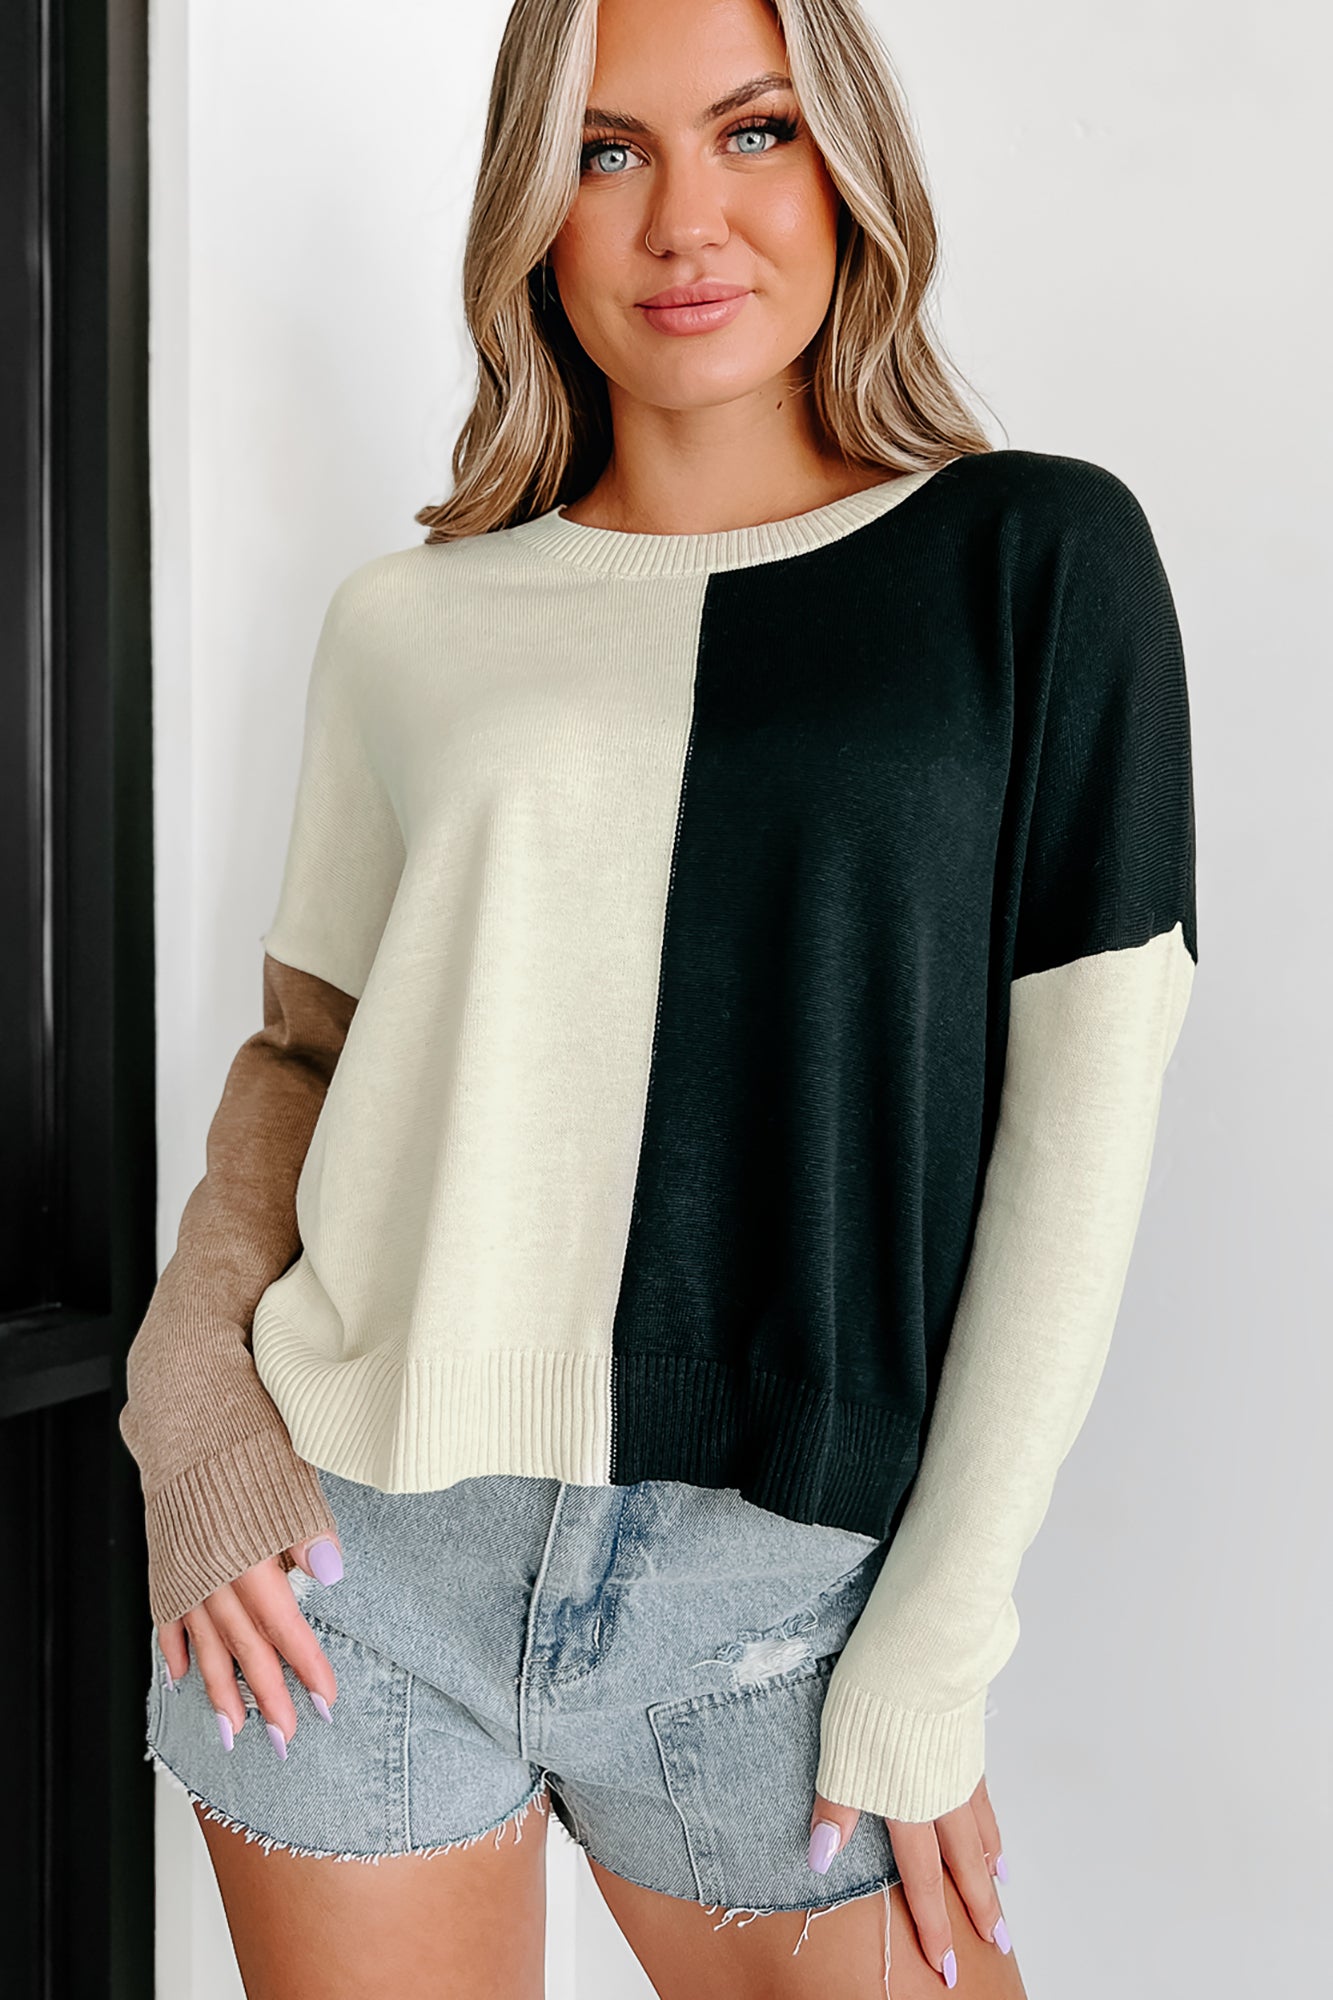 Never Giving Up On You Colorblock Sweater (Black Multi) - NanaMacs